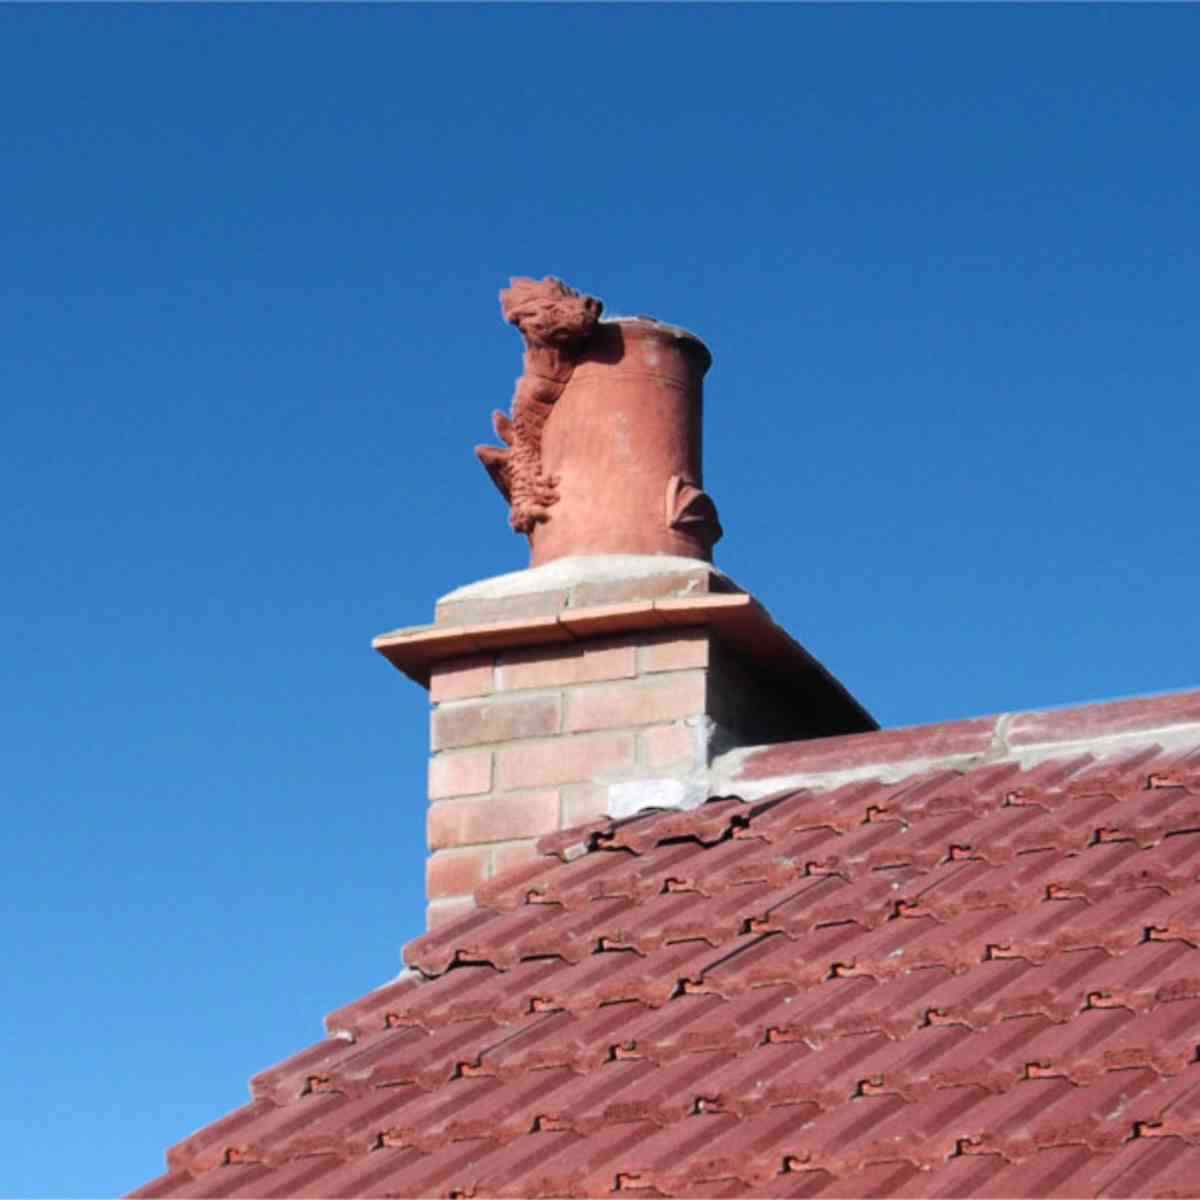 dragon chimney pot on roof